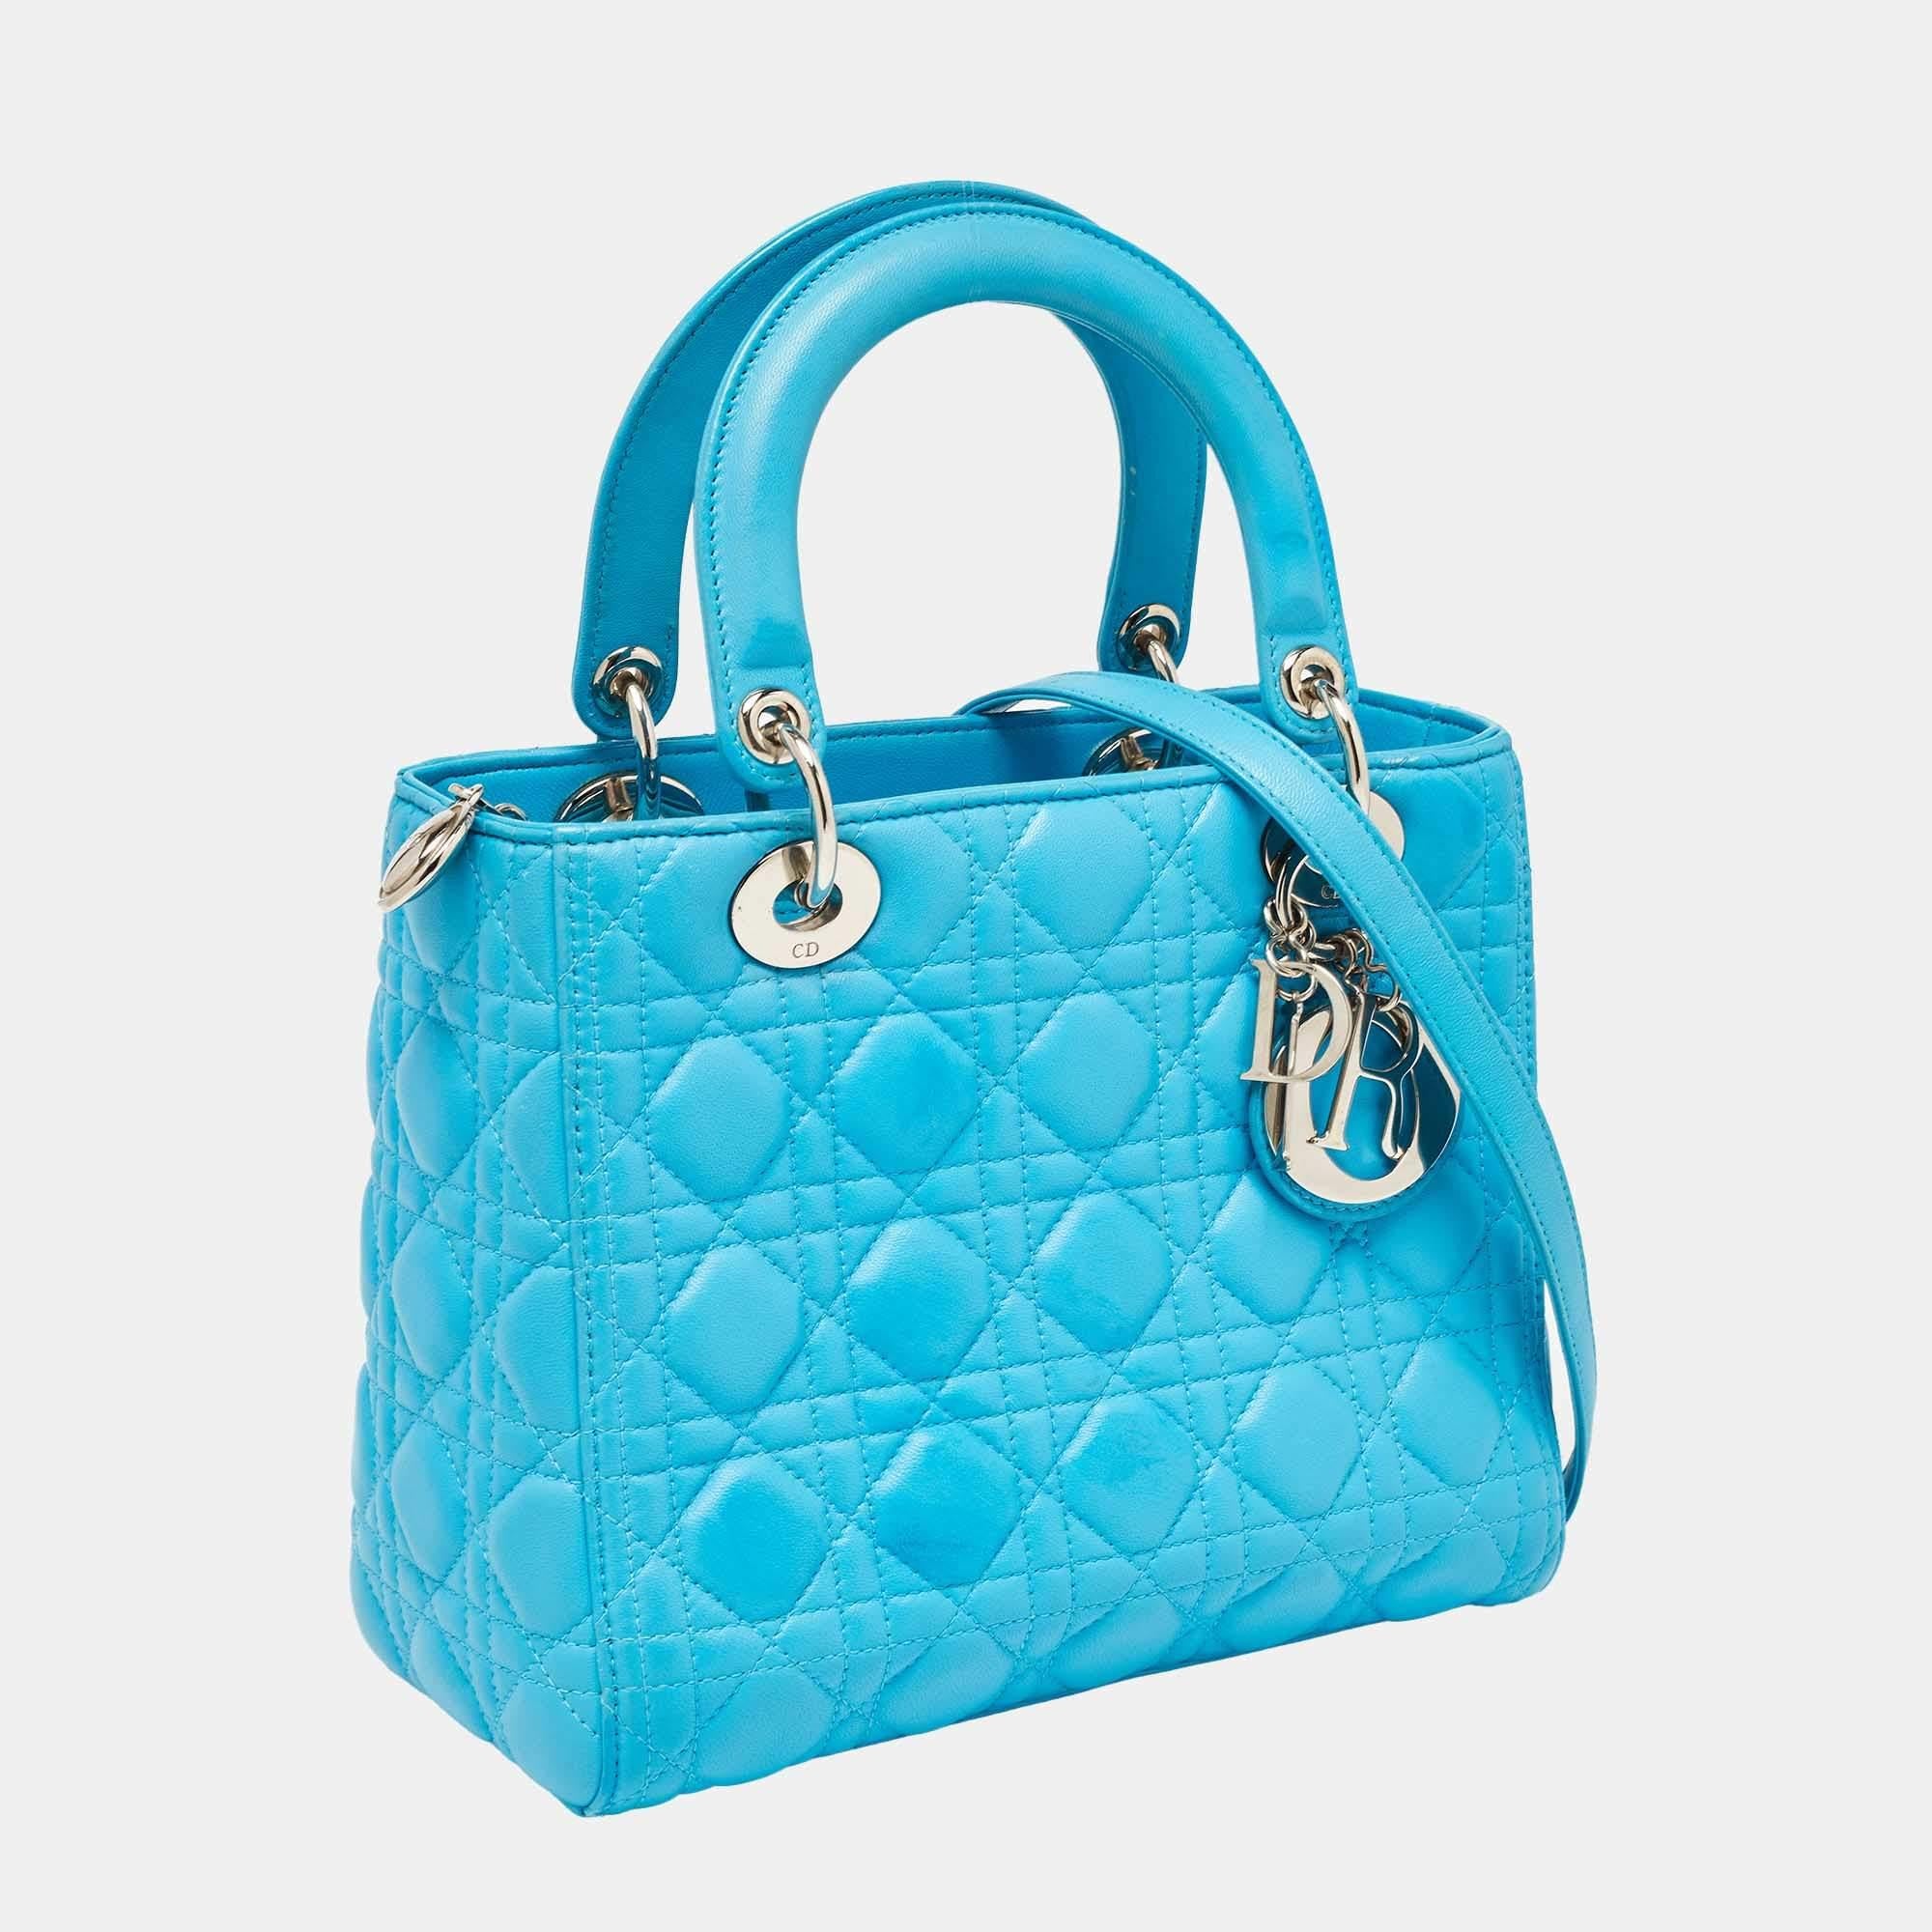 Dior Blue Cannage Leather Medium Lady Dior Tote In Good Condition For Sale In Dubai, Al Qouz 2